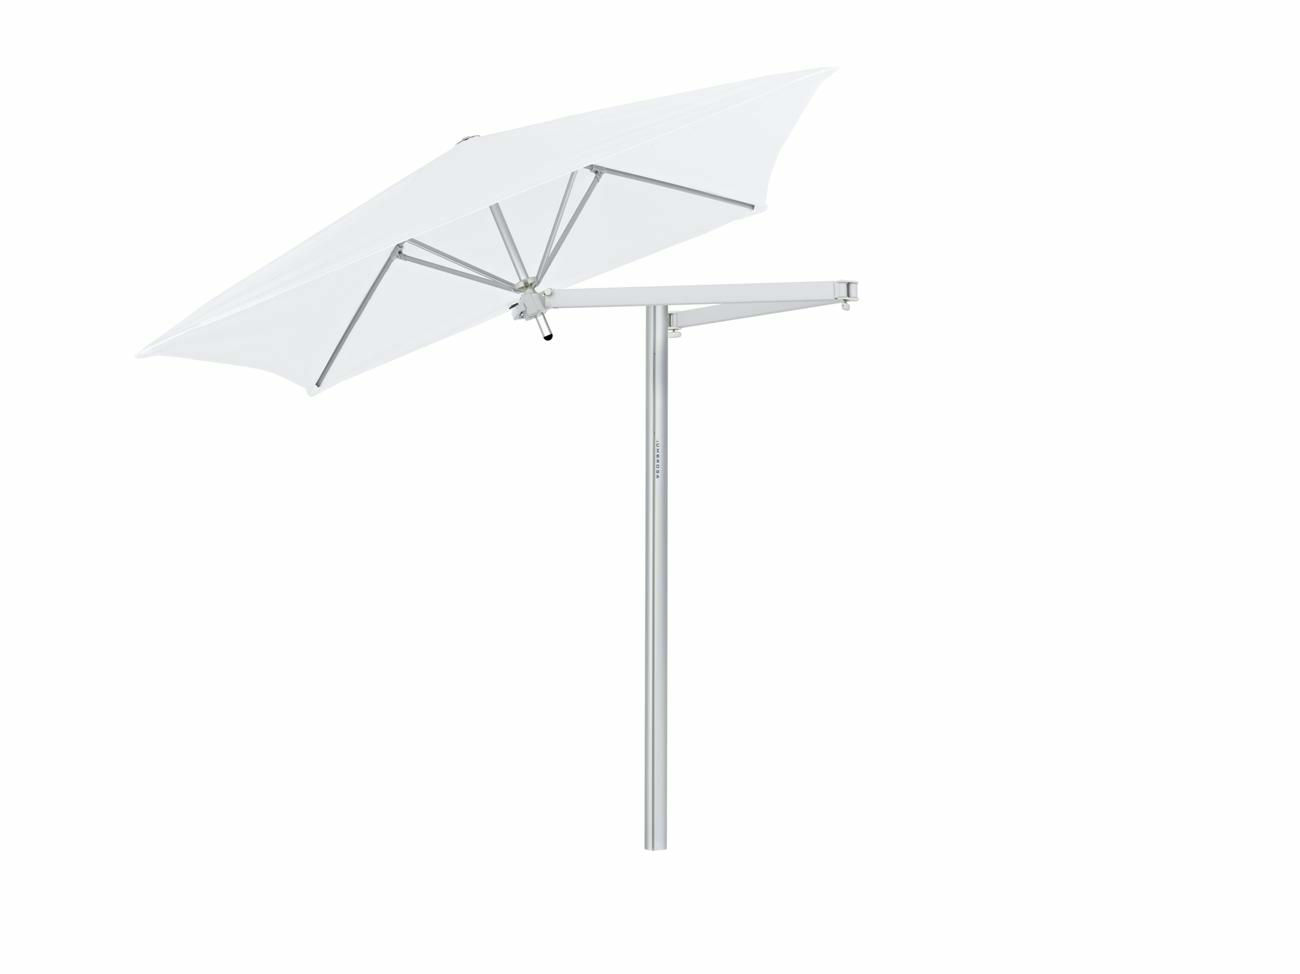 Paraflex cantilever umbrella square 1,9 m with Natural fabric and a Neo arm